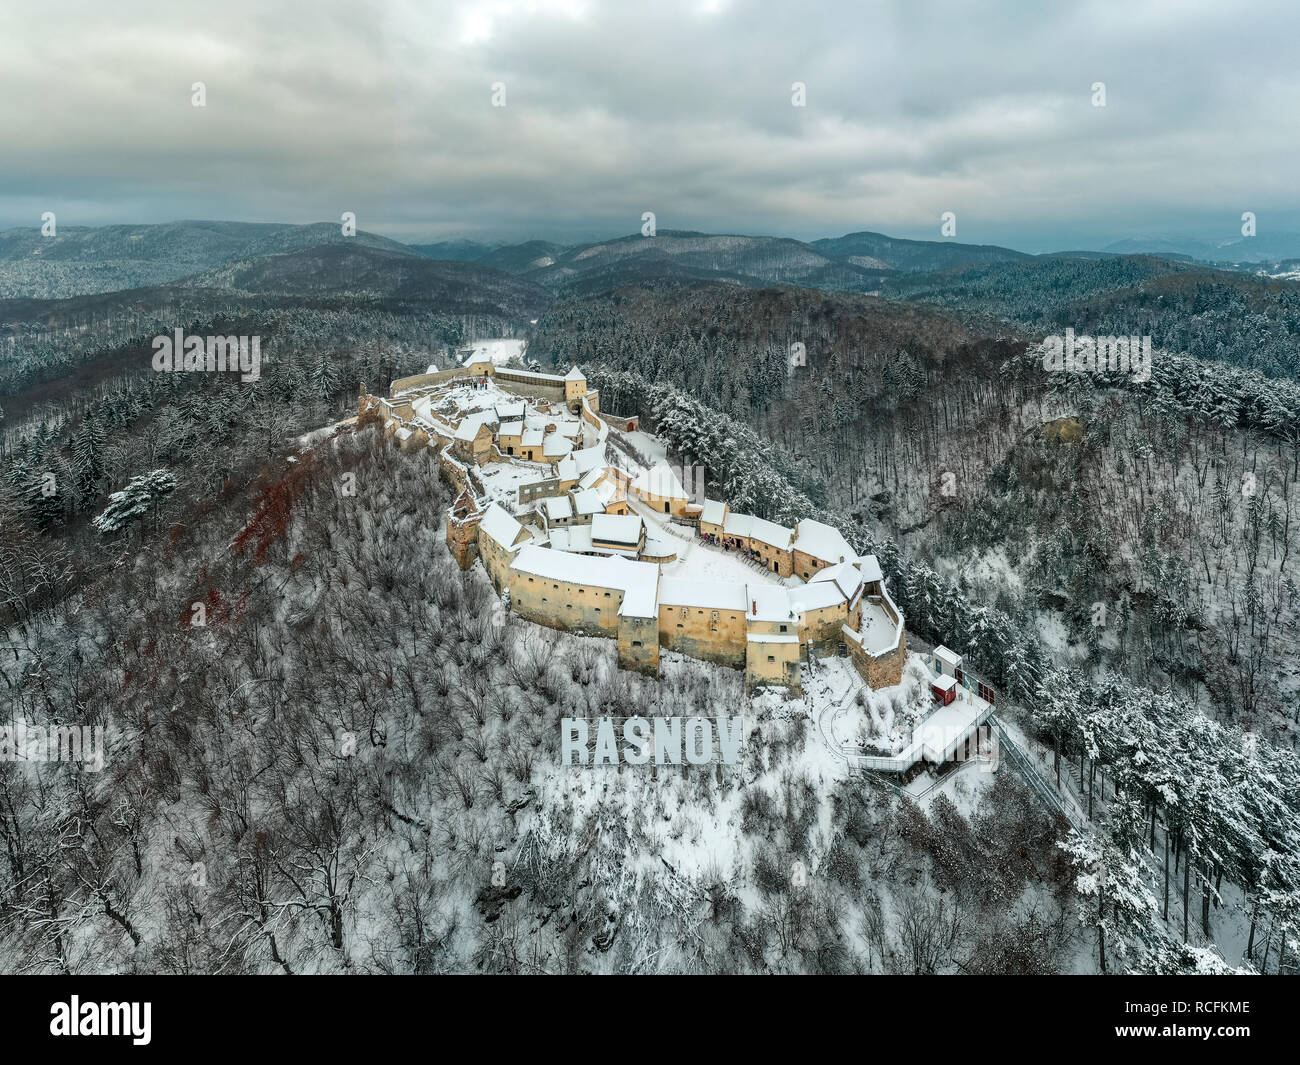 Snow at Rasnov Fortress, Transylvania, Romania Stock Photo